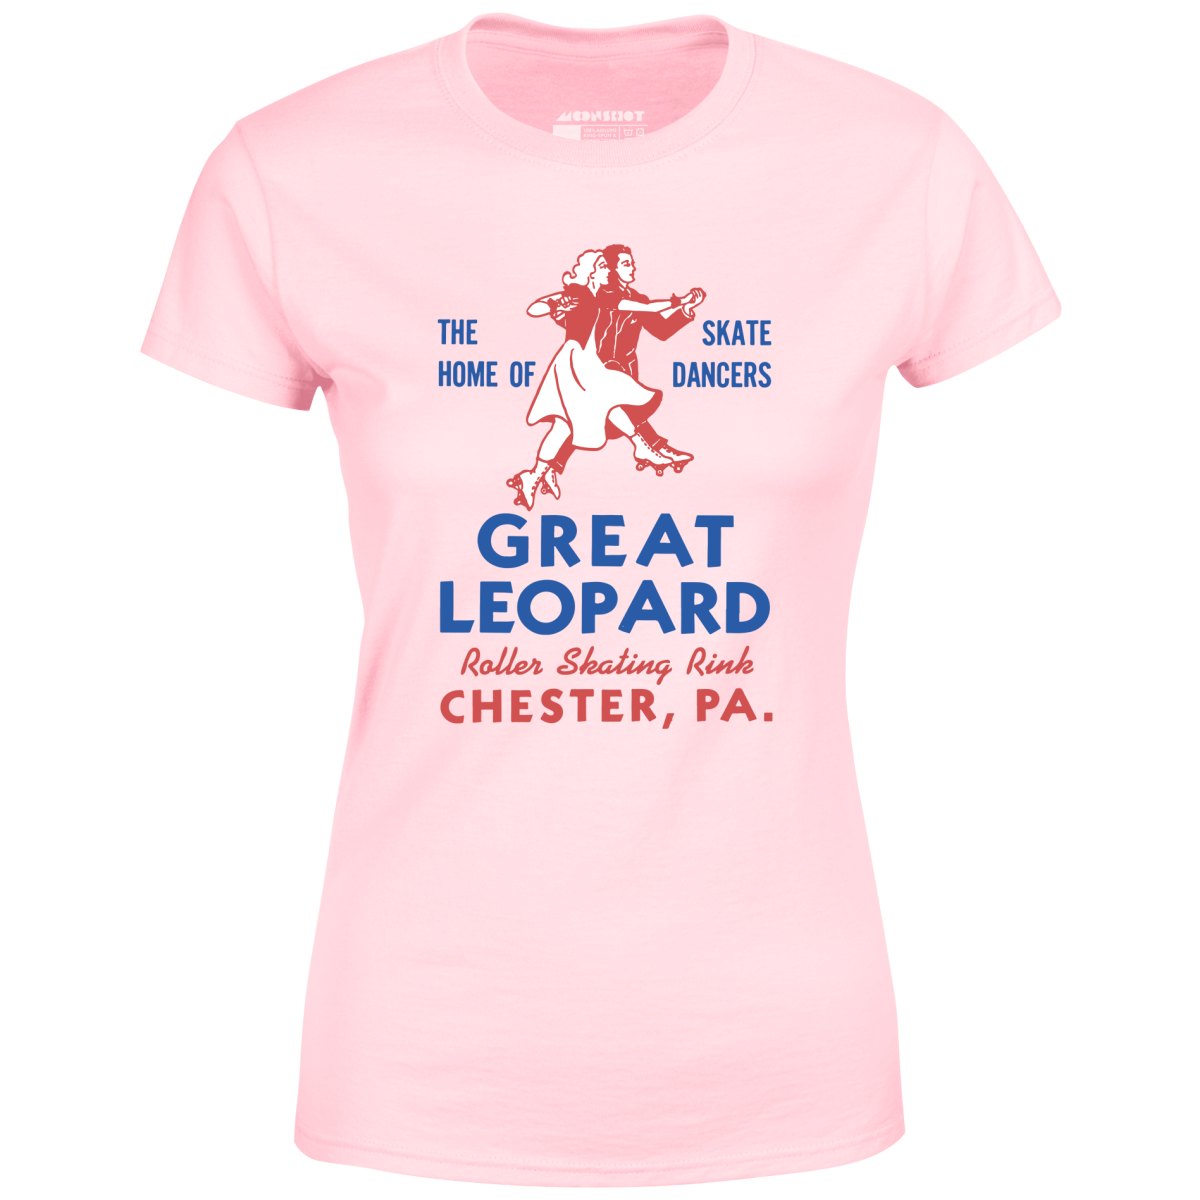 Great Leopard Roller Skating Rink - Chester, PA - Vintage Roller Rink - Women's T-Shirt